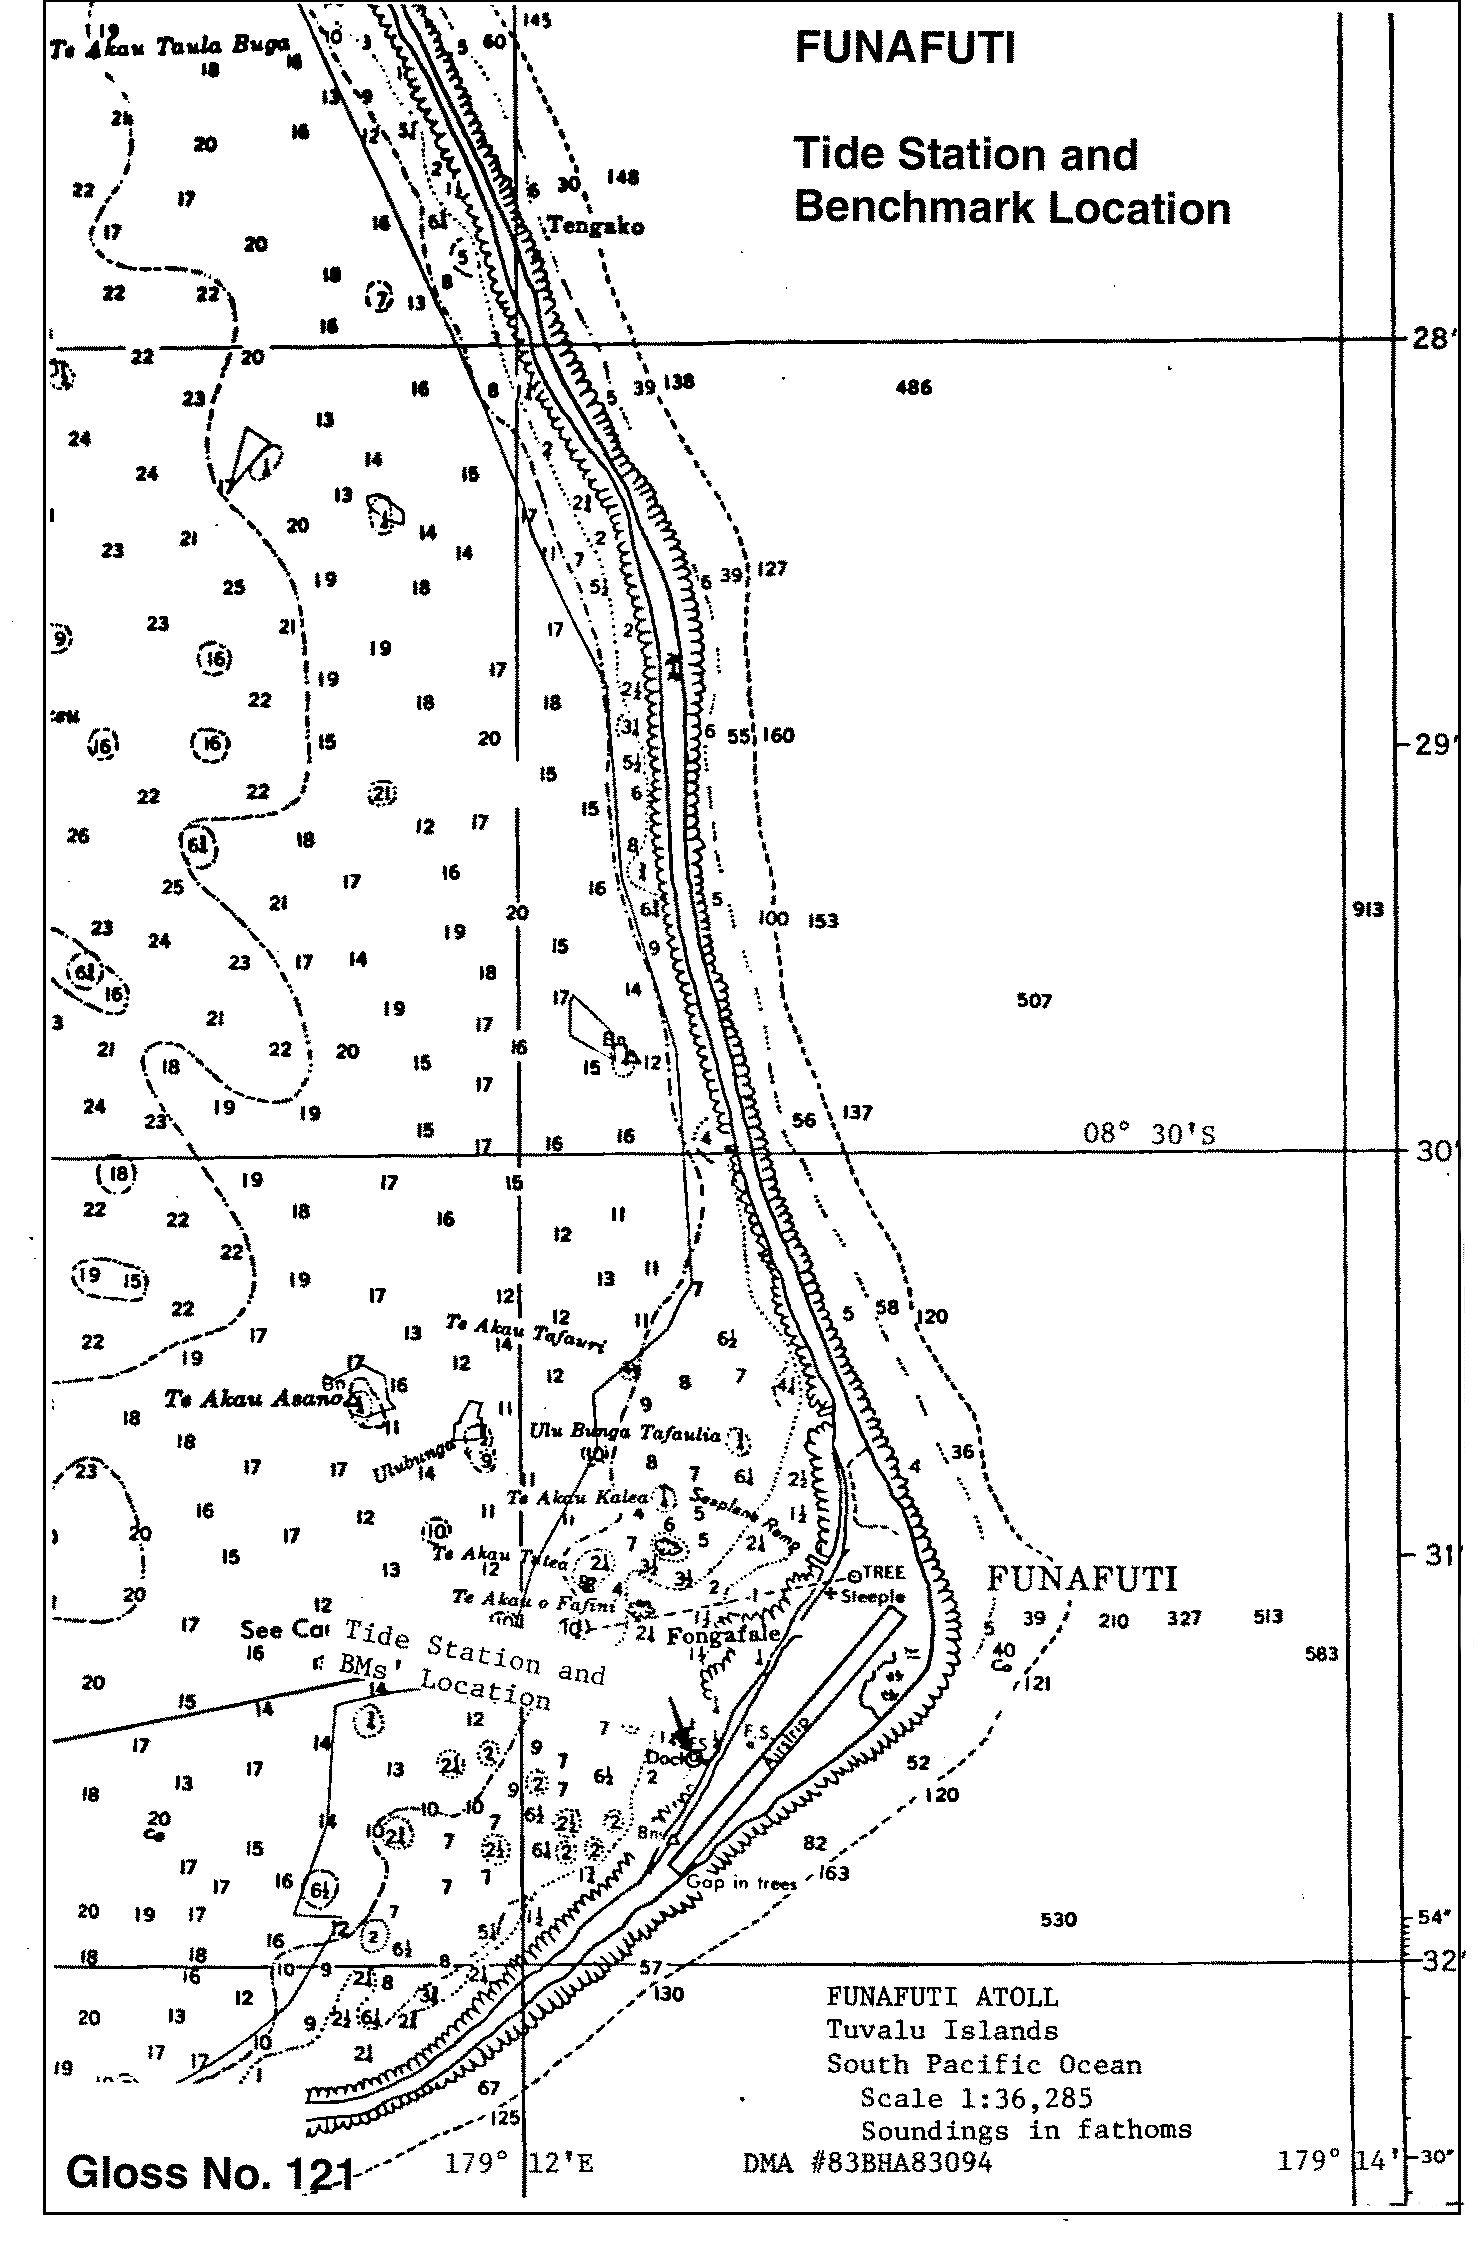 Location map for Funafuti, Ellice Is., Tuvalu